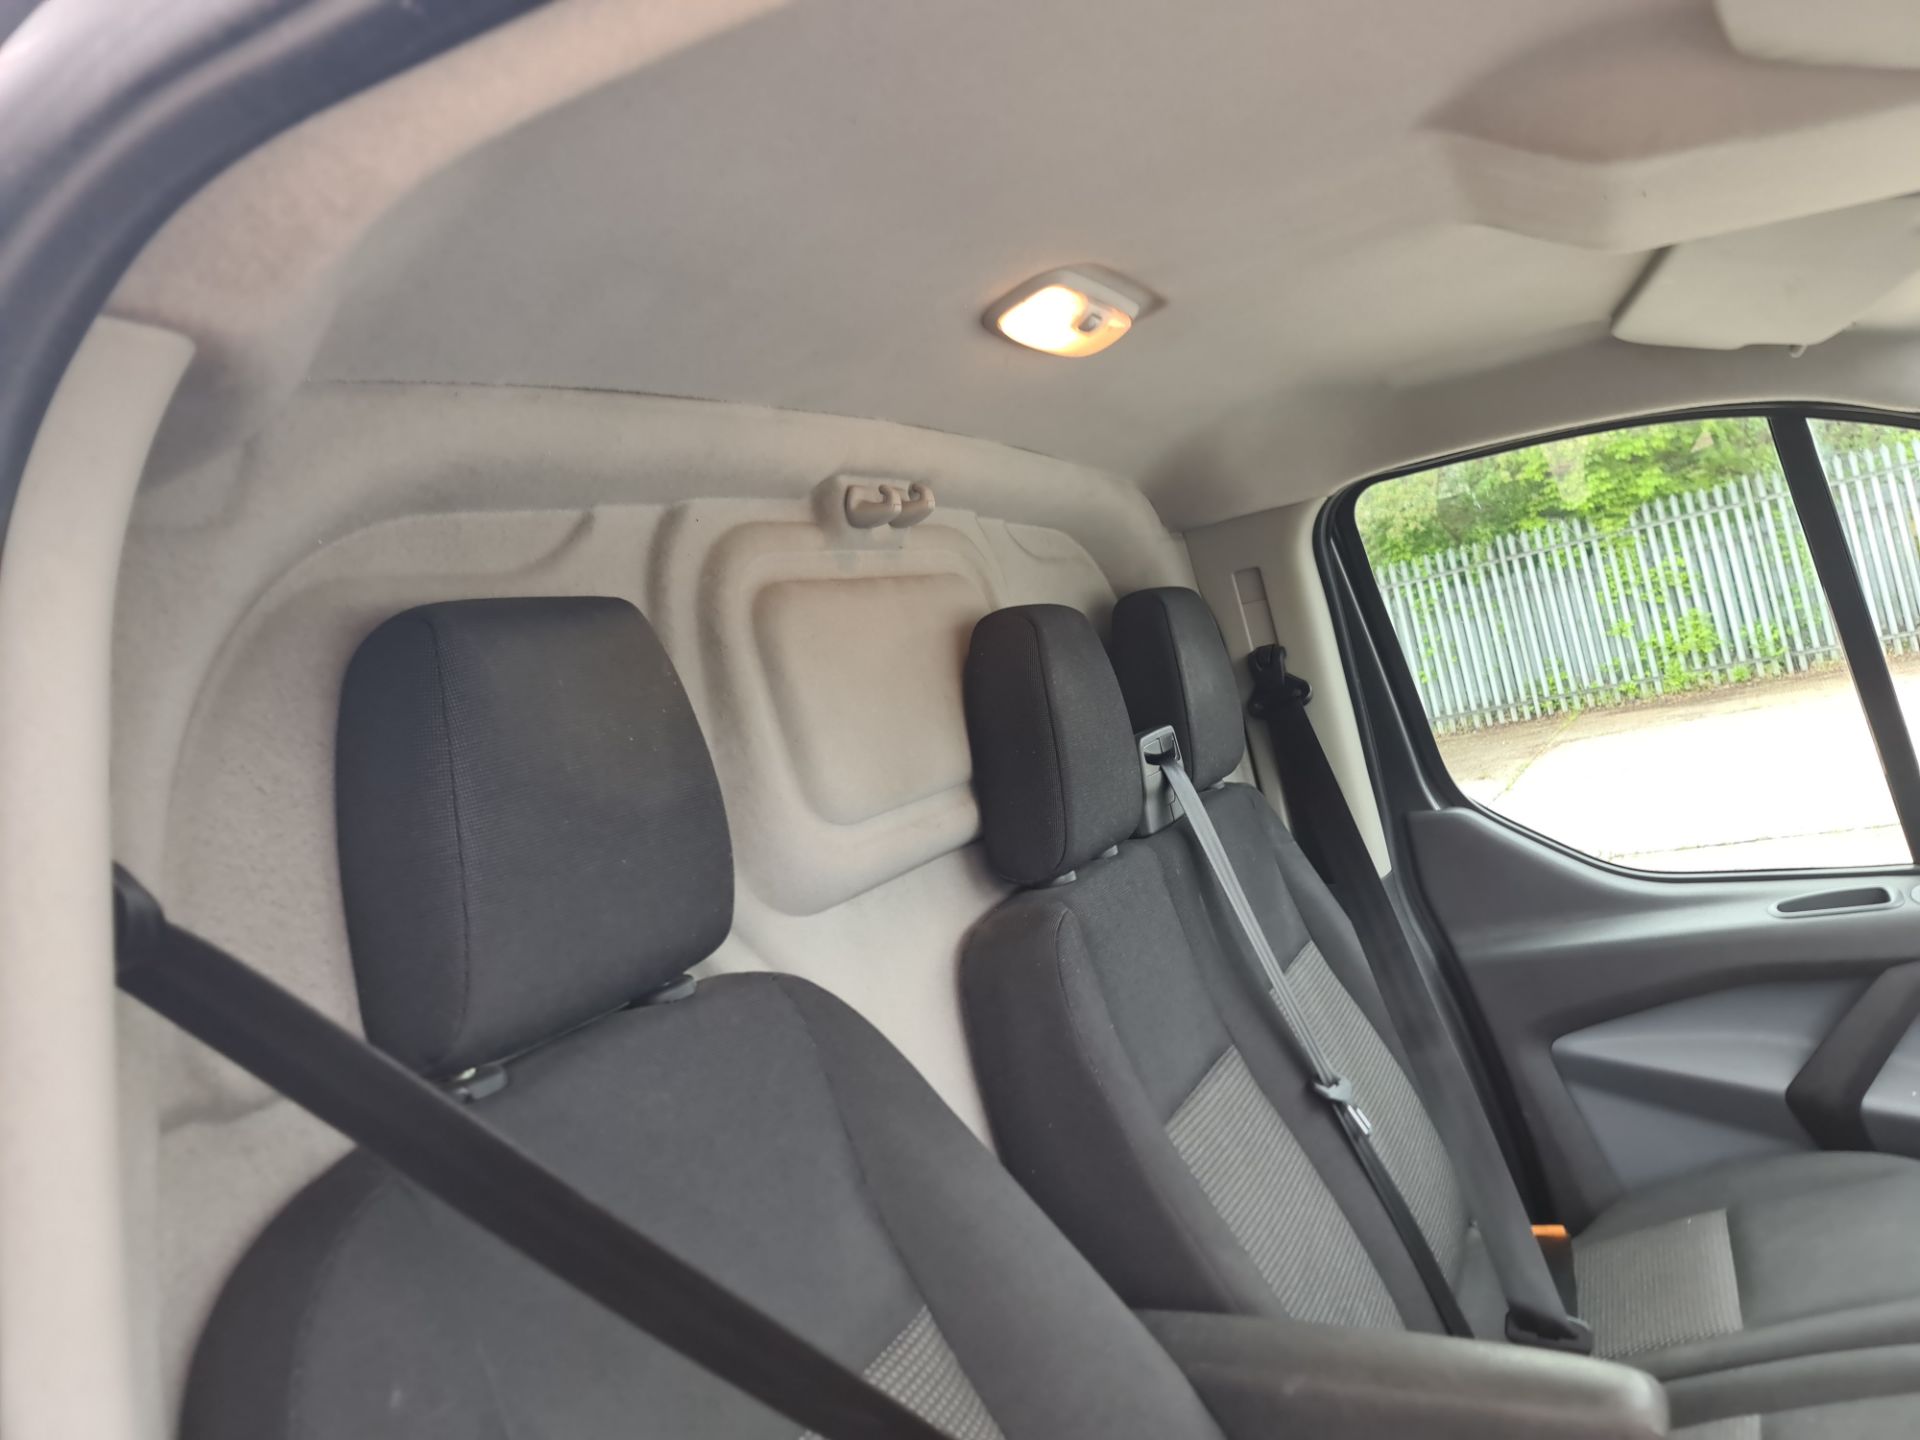 2018 Ford Transit Custom 270 panel van - Image 19 of 74